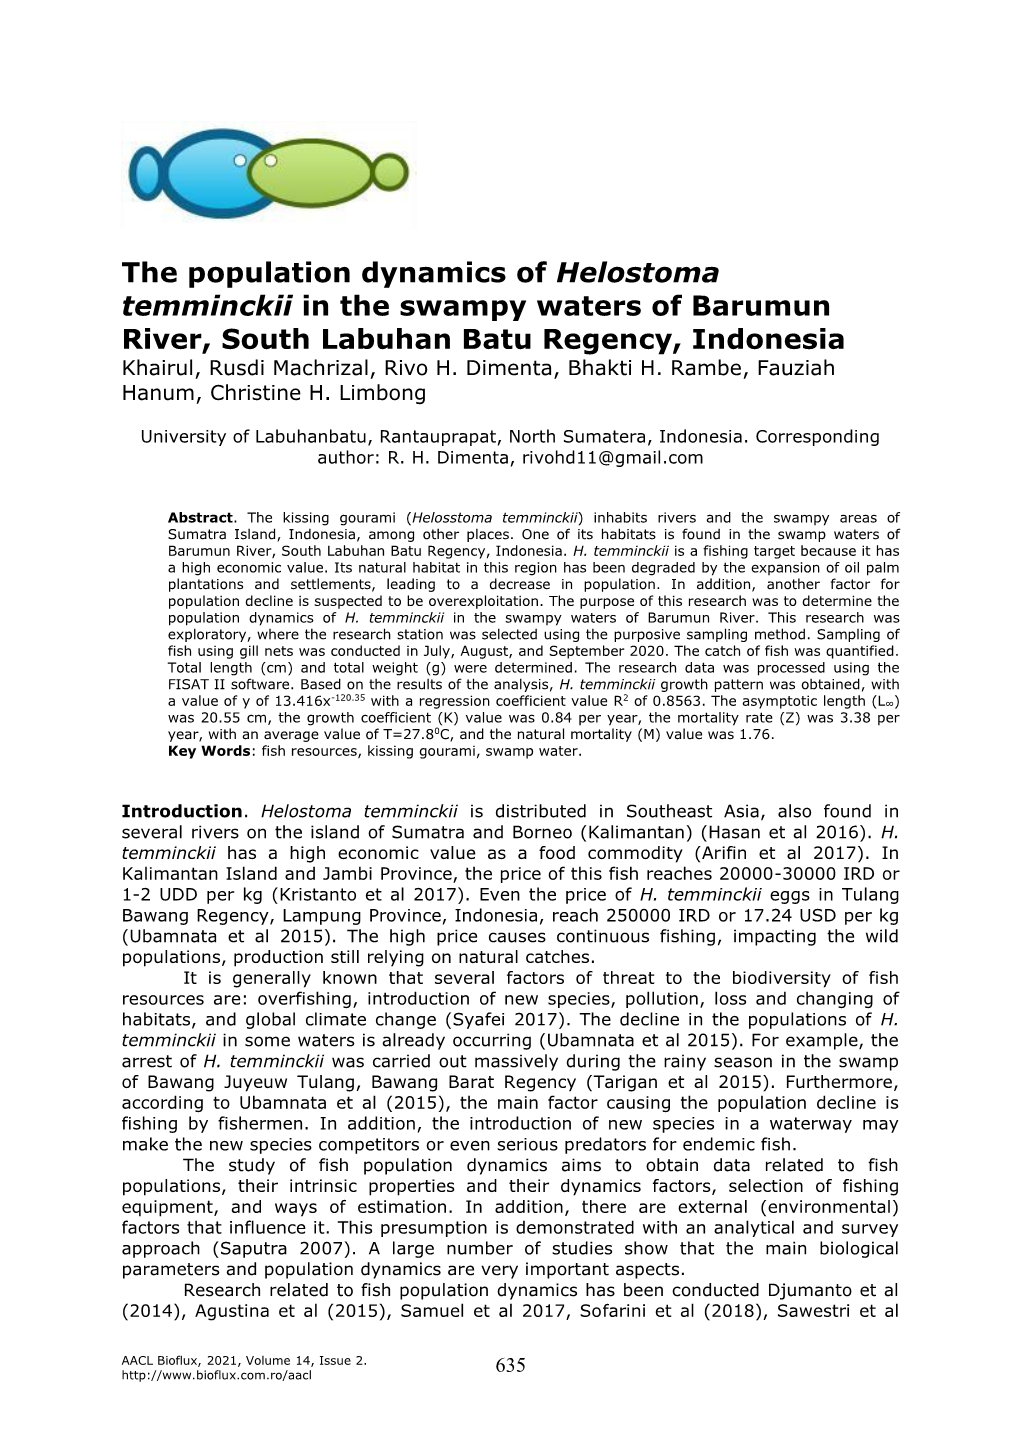 The Population Dynamics of Helostoma Temminckii in the Swampy Waters of Barumun River, South Labuhan Batu Regency, Indonesia Khairul, Rusdi Machrizal, Rivo H